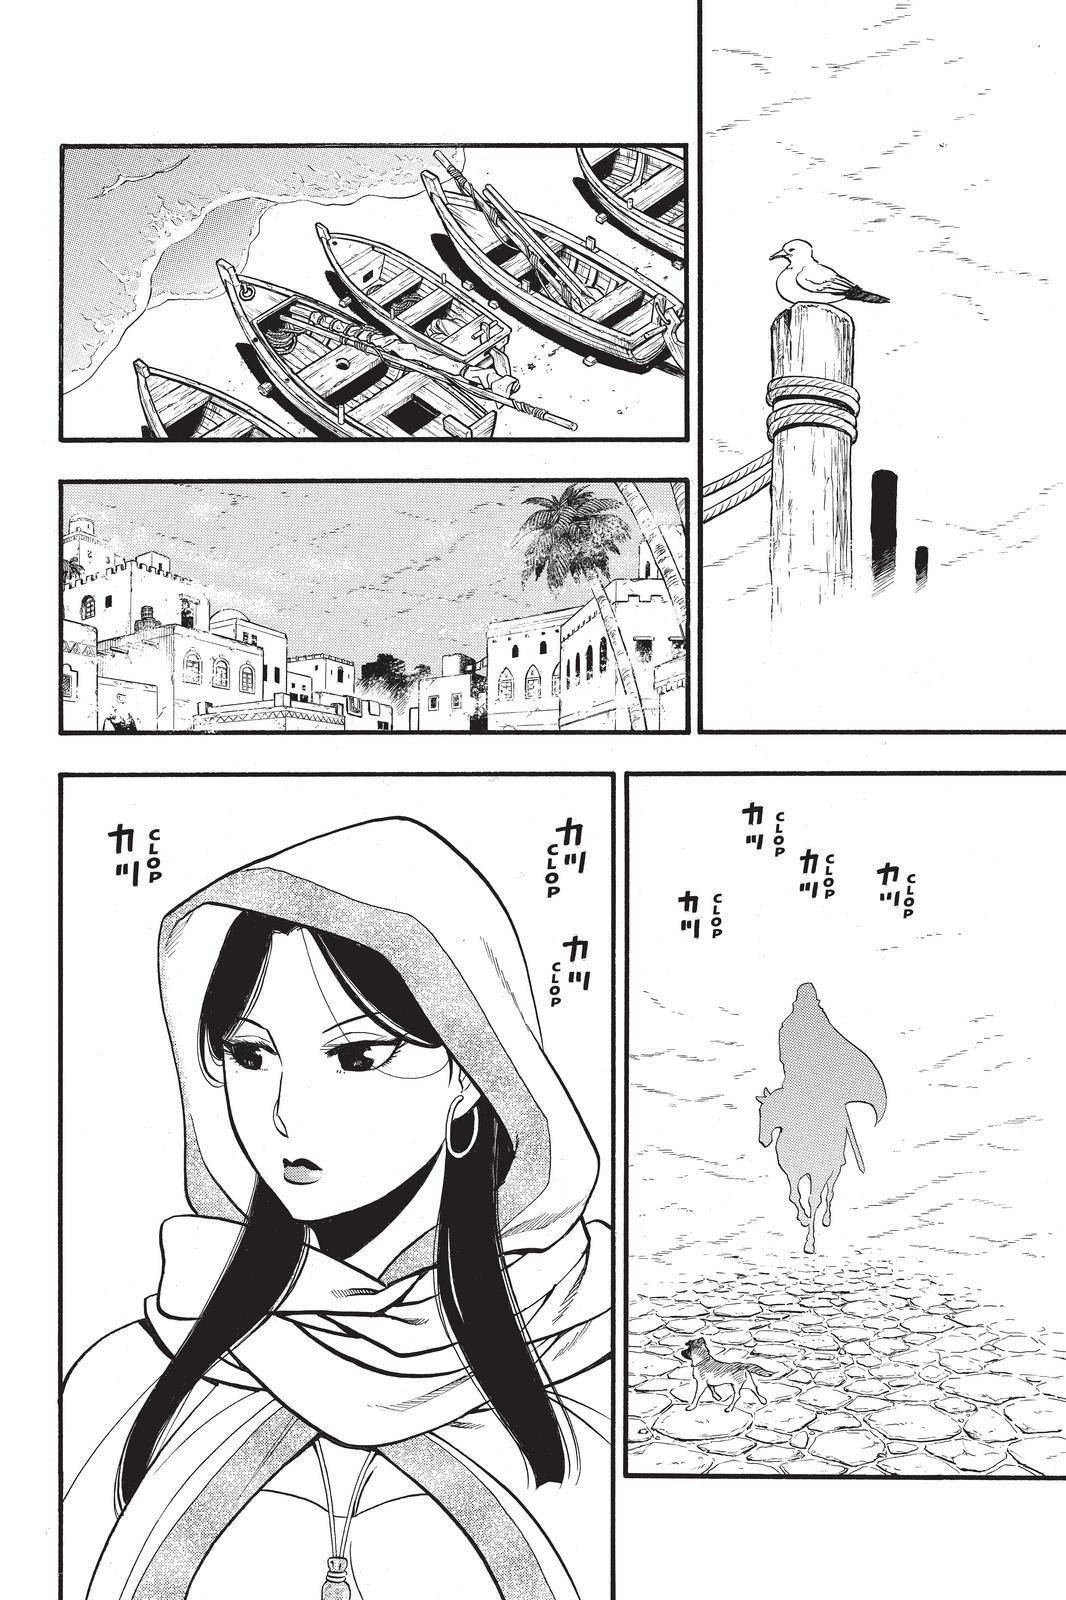 Arslan Senki (ARAKAWA Hiromu) - chapter 104 - #4